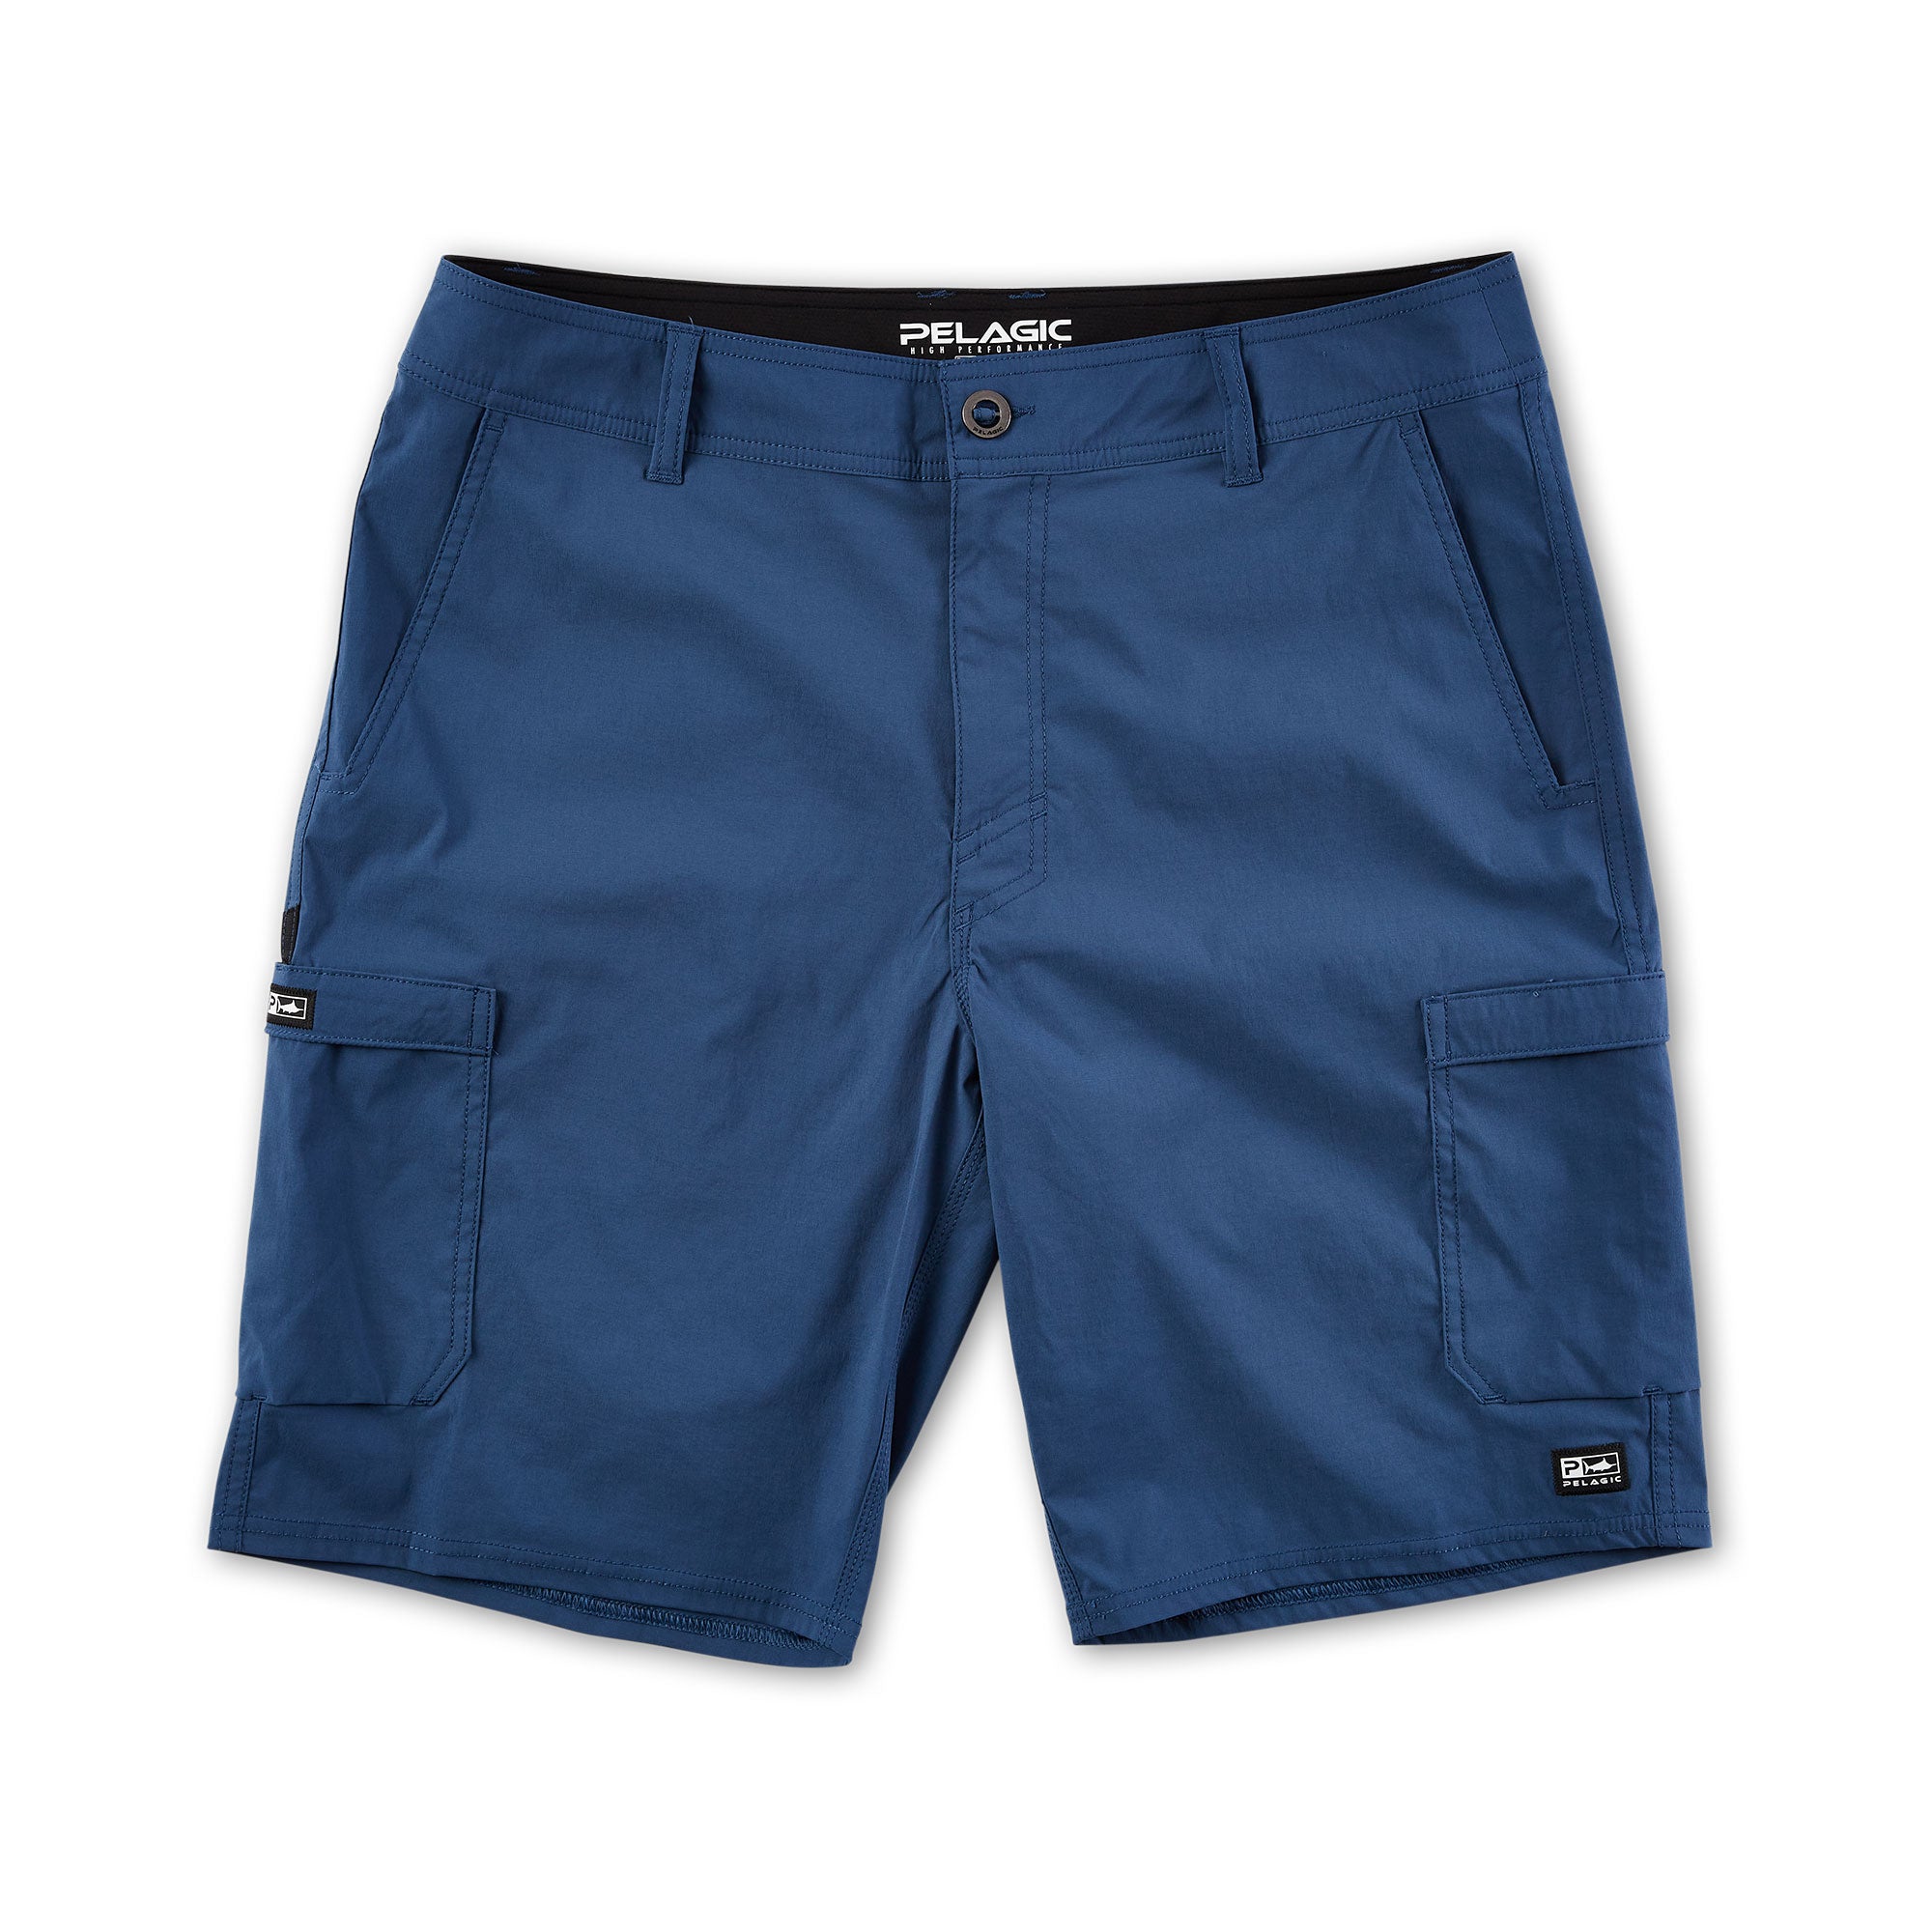 Pelagic Madeira Cargo Hybrid Shorts 20 34 / Smokey Blue